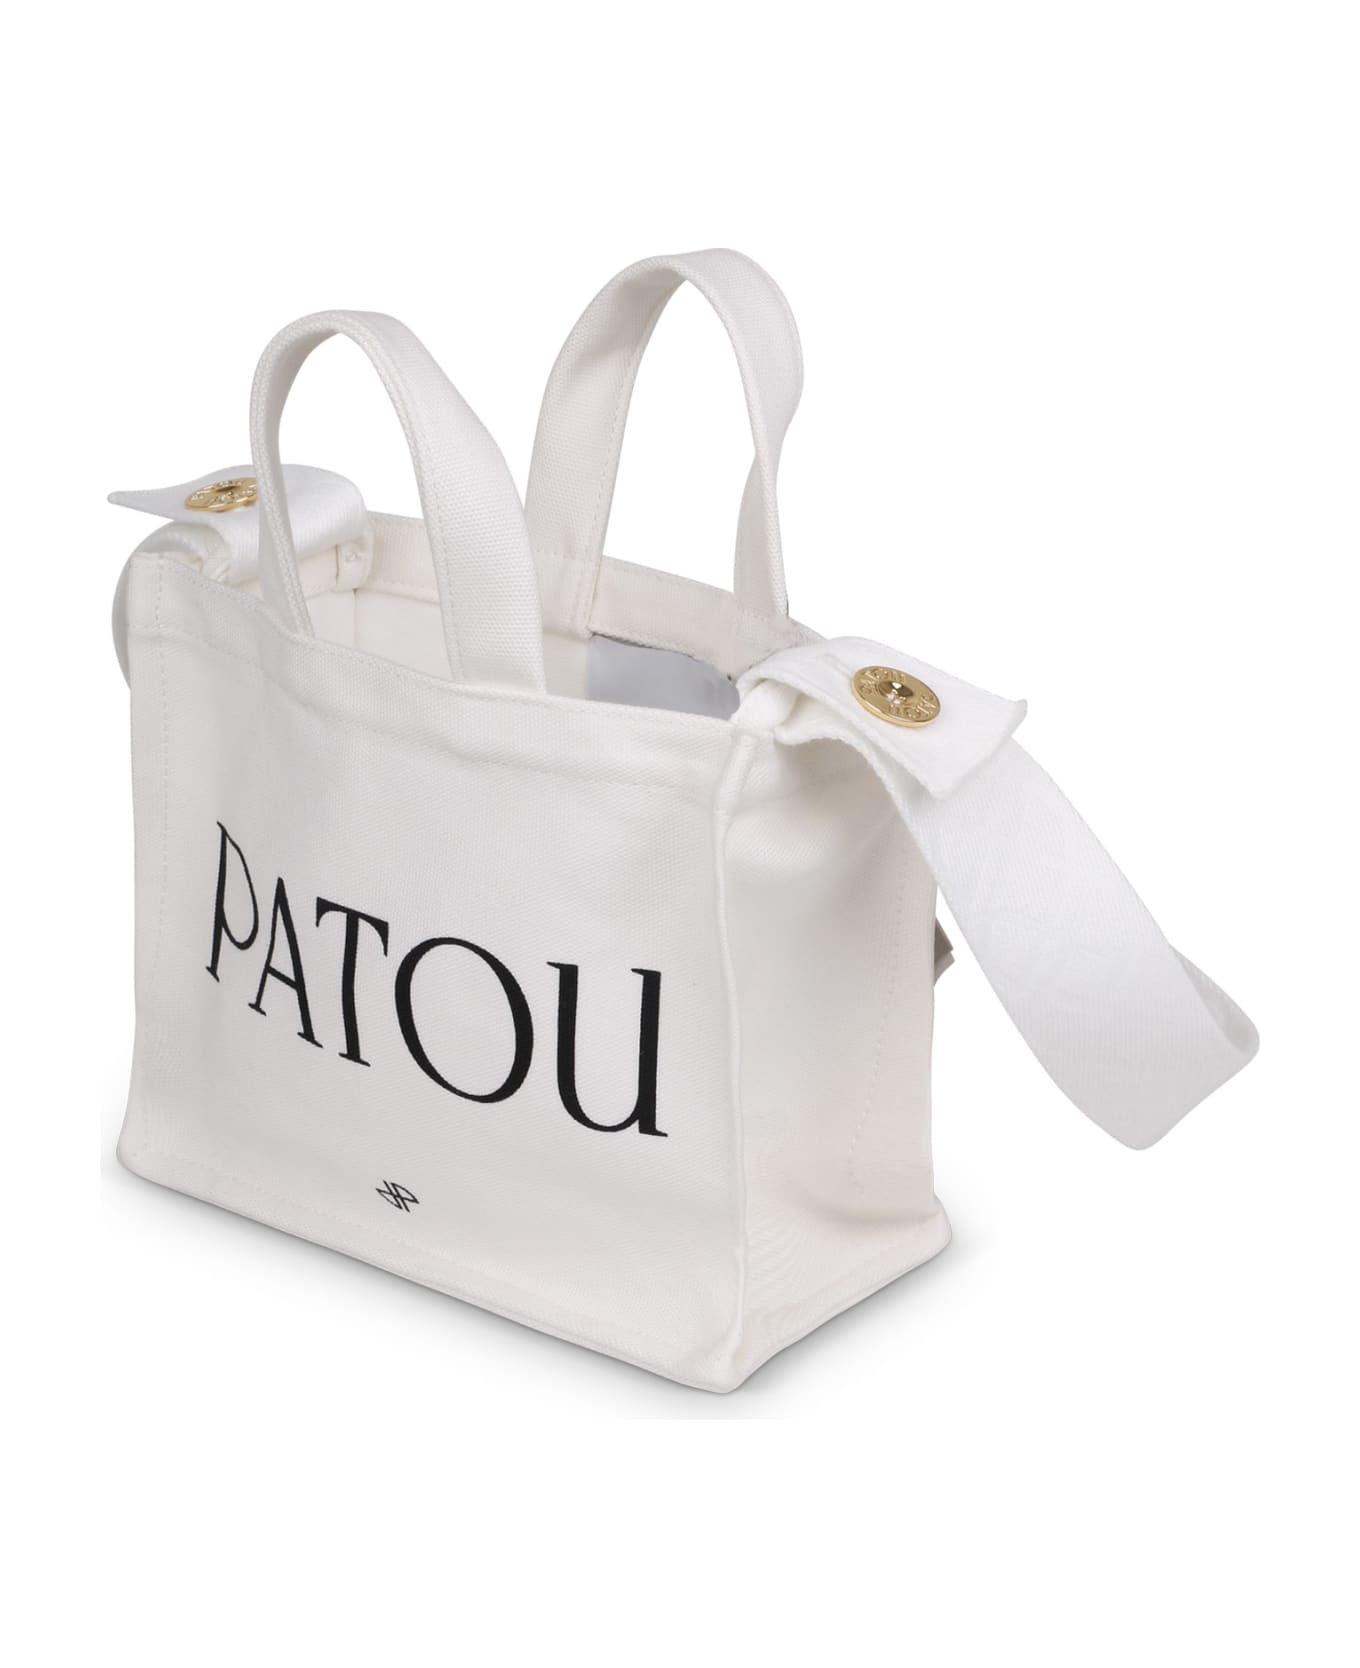 Patou Small Logo-print Tote Bag トートバッグ